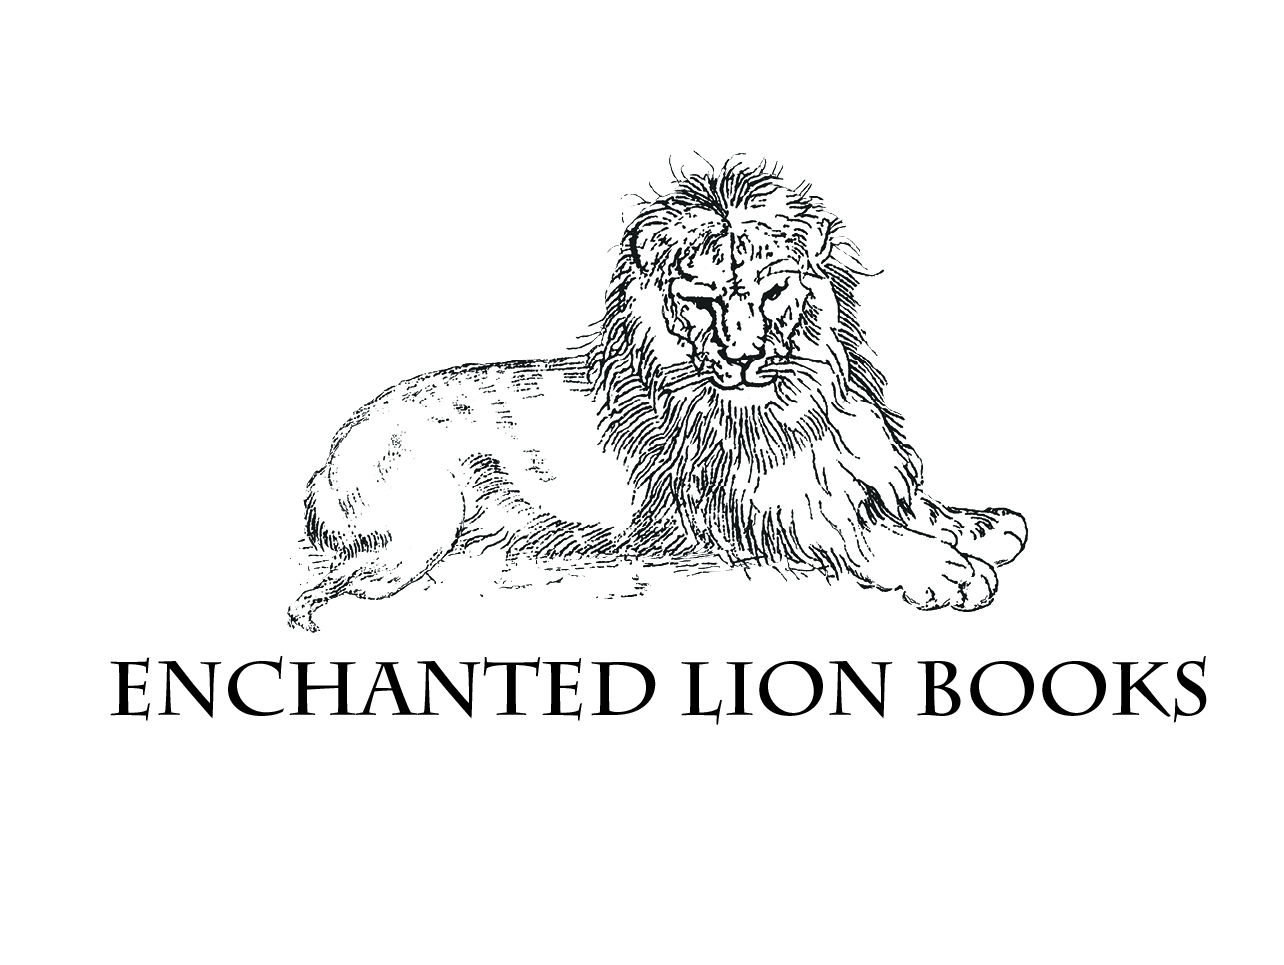 Enchanted Lion Books